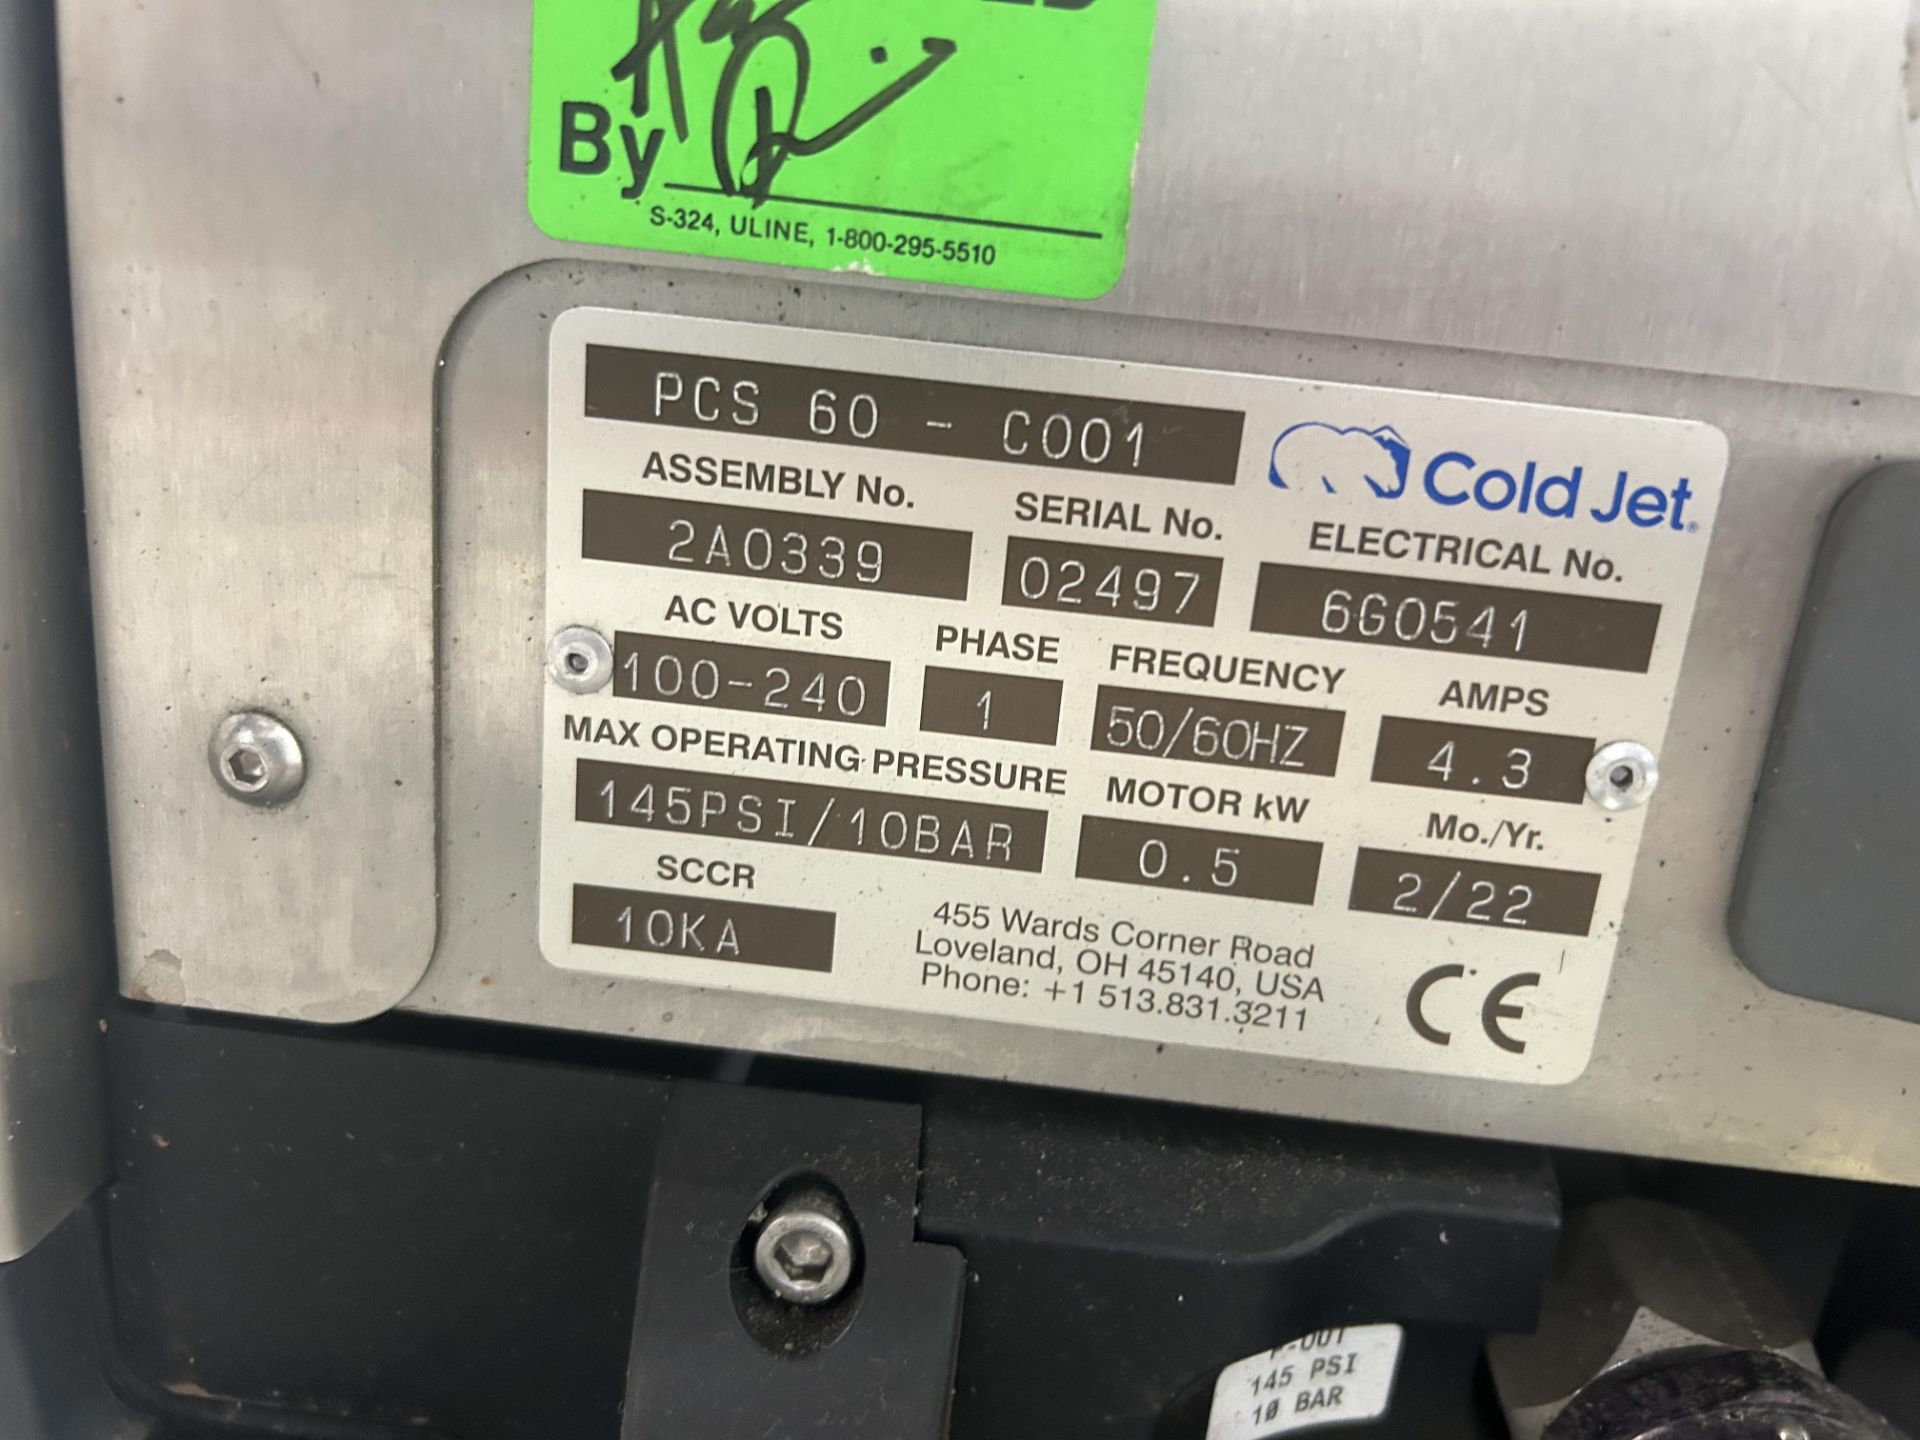 Cold Jet PCS 60-C001 Dry Ice Blaster (2022) - Image 3 of 3